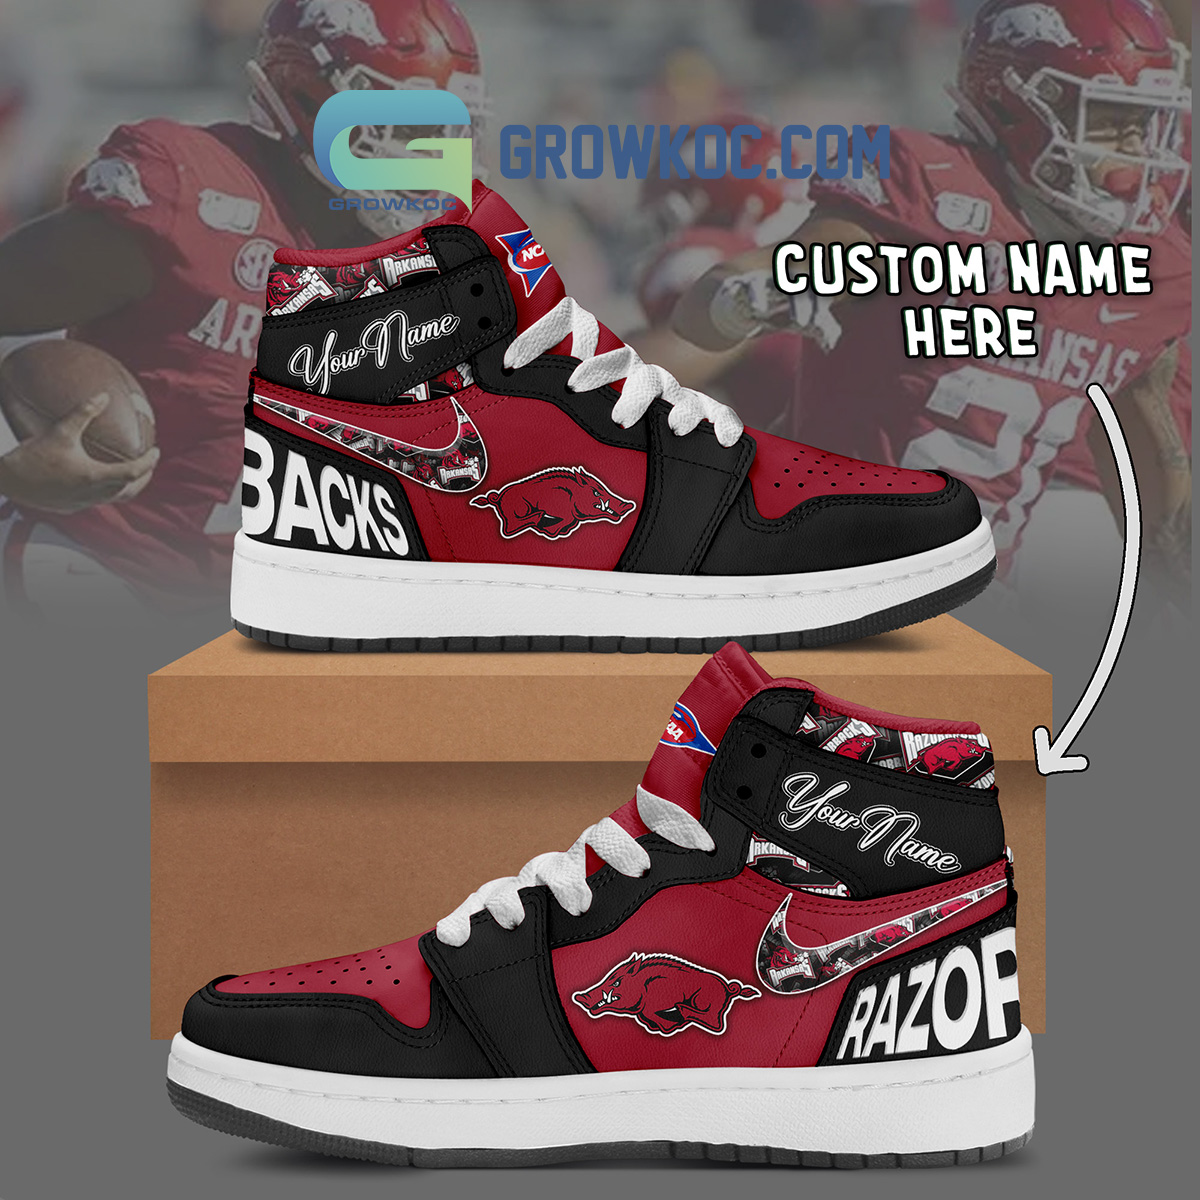 Jordan 1 Customs Shoes